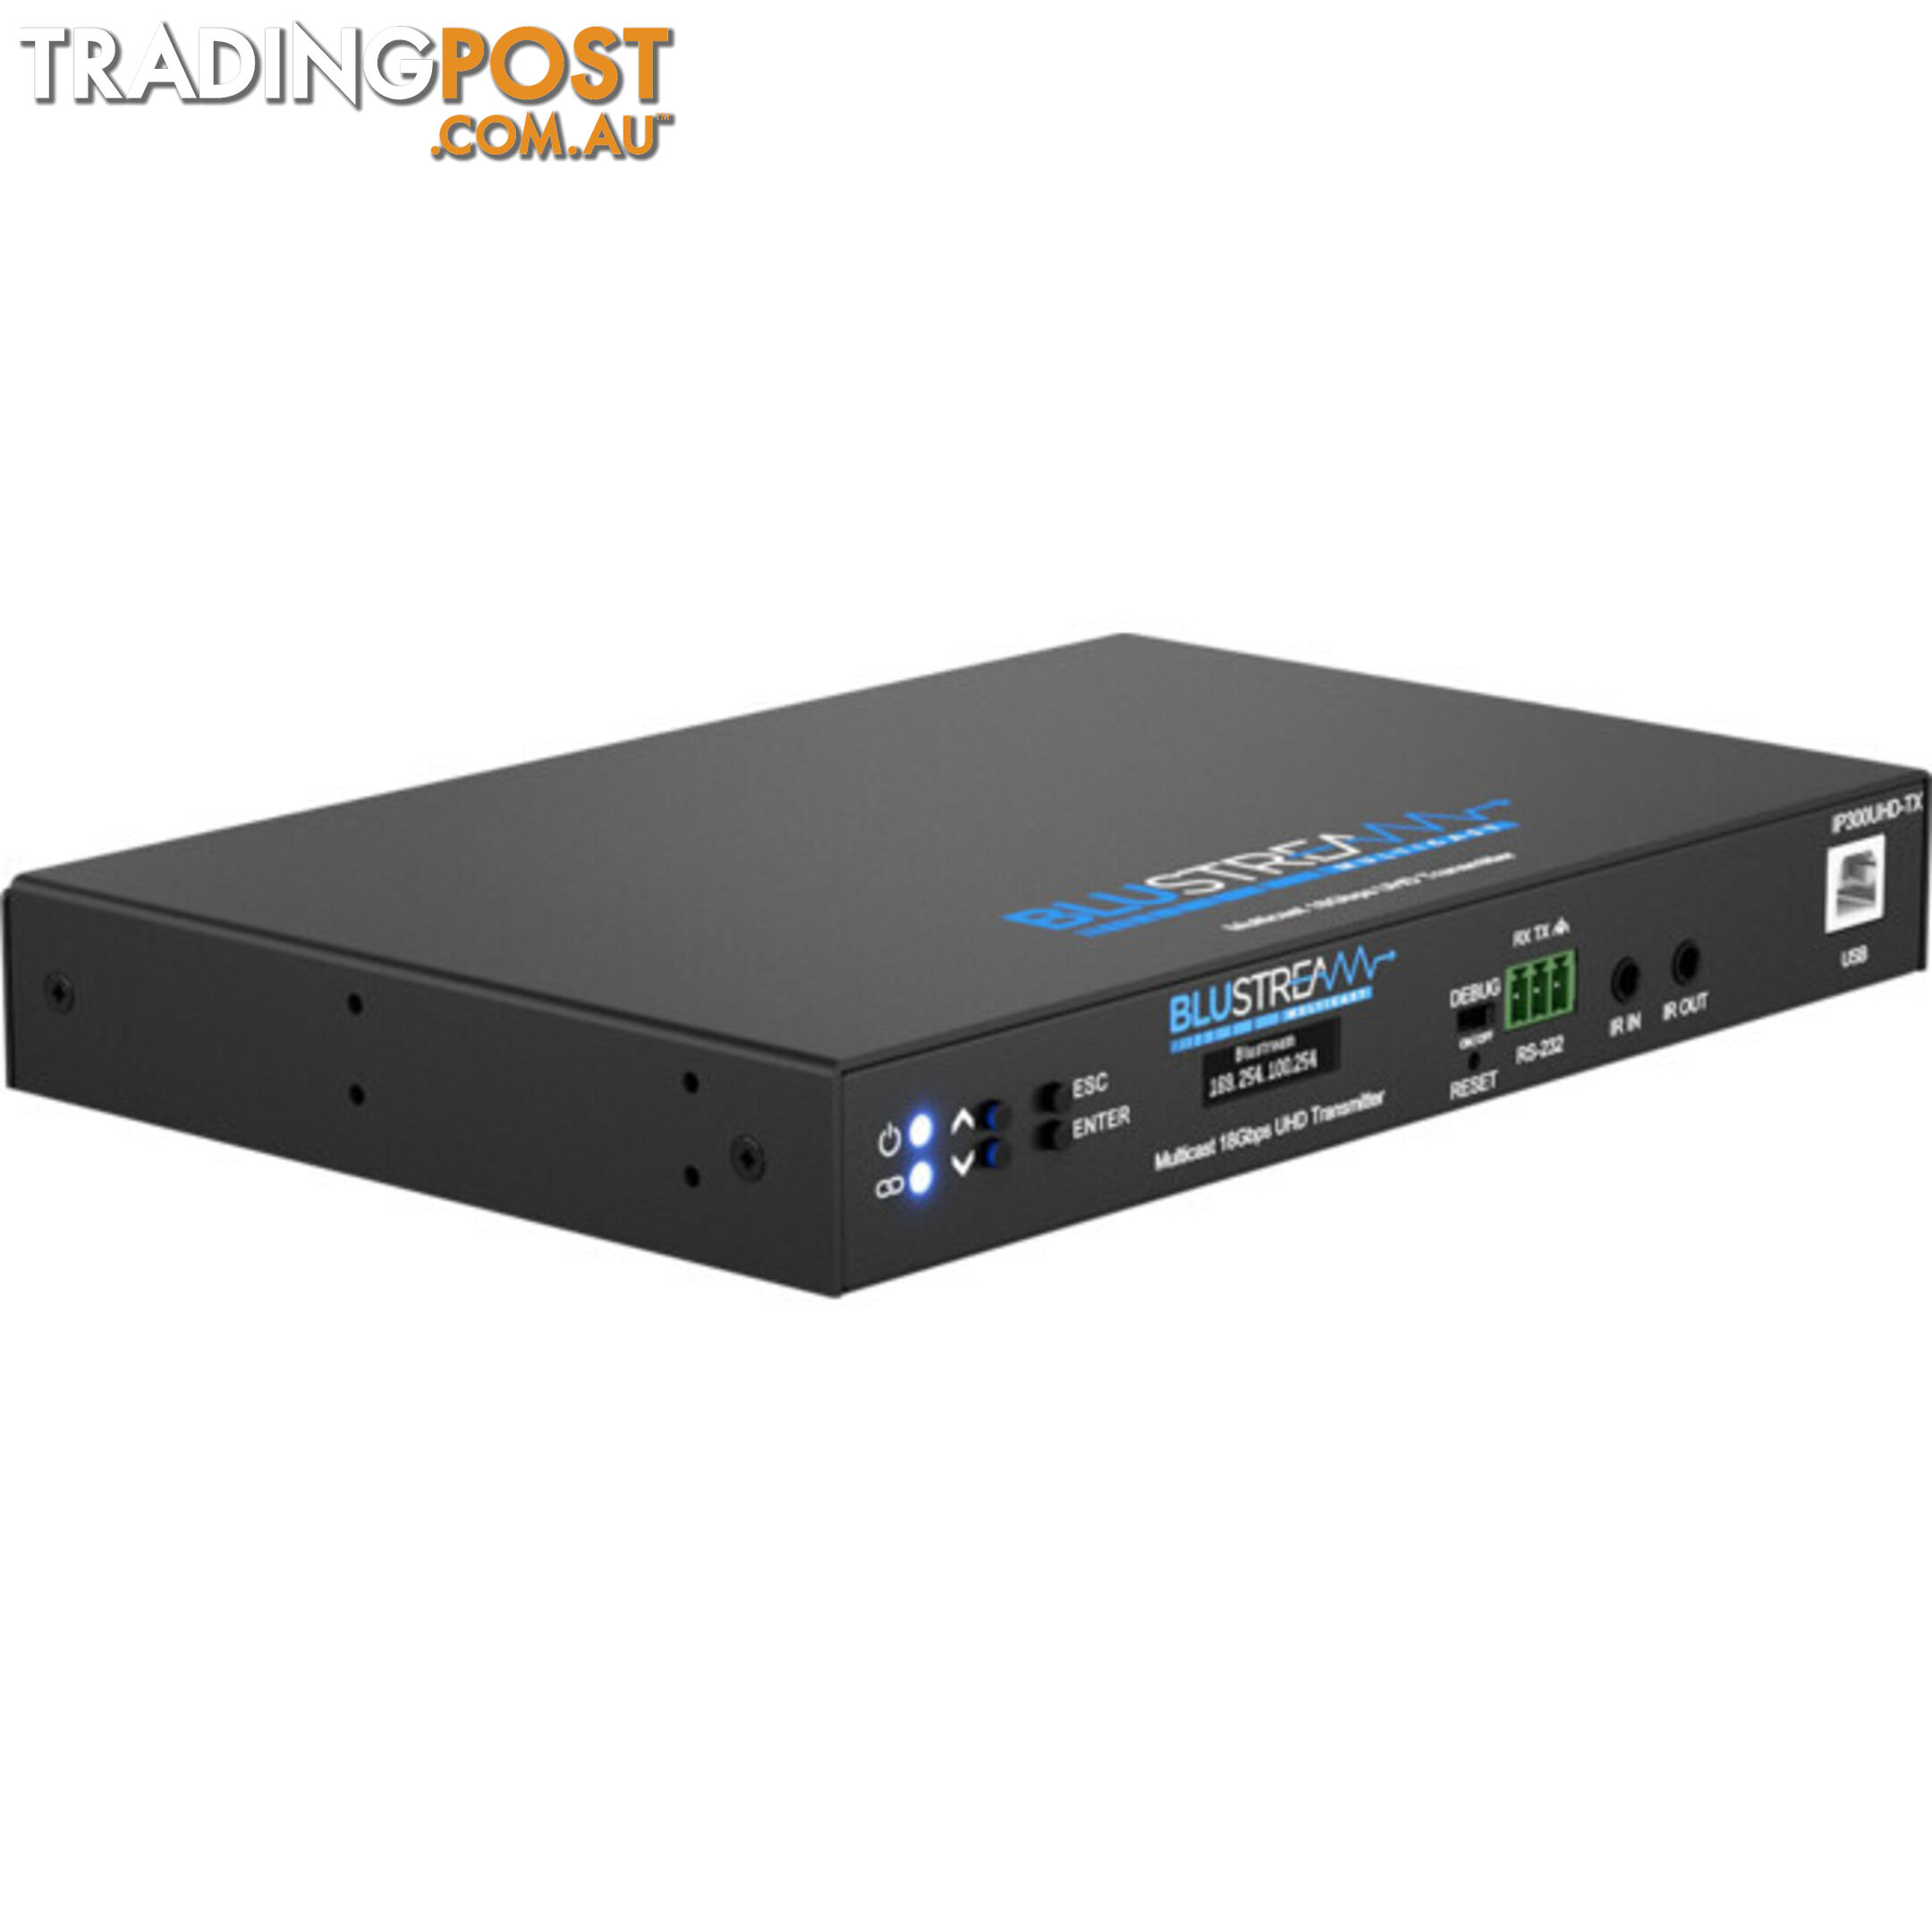 IP300UHDTX IP MULTICAST UHD 18GBPS VIDEO TRANSMITTER OVER 1GB IR, RS-232 & USB / KVM, POE- HDCP2.2